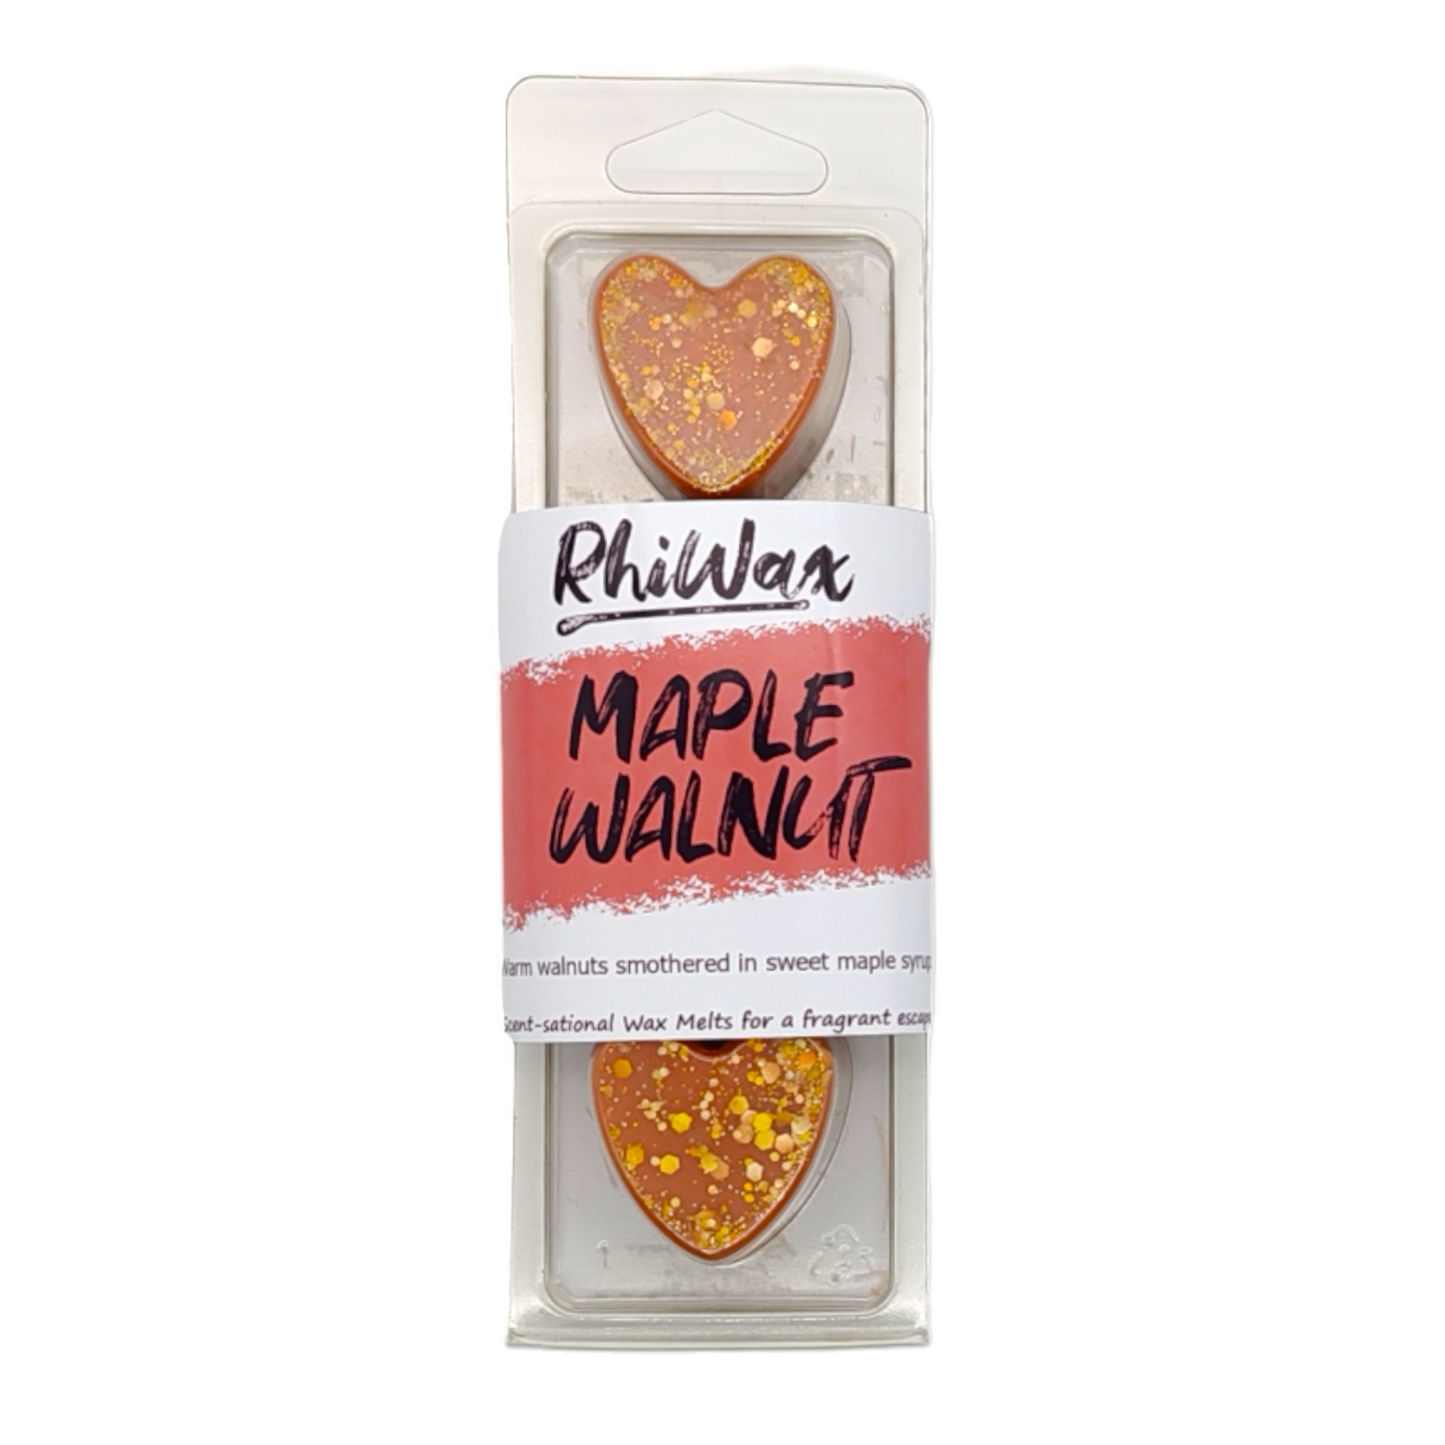 Maple Walnut Wax Melts - Maple Syrup, Walnuts